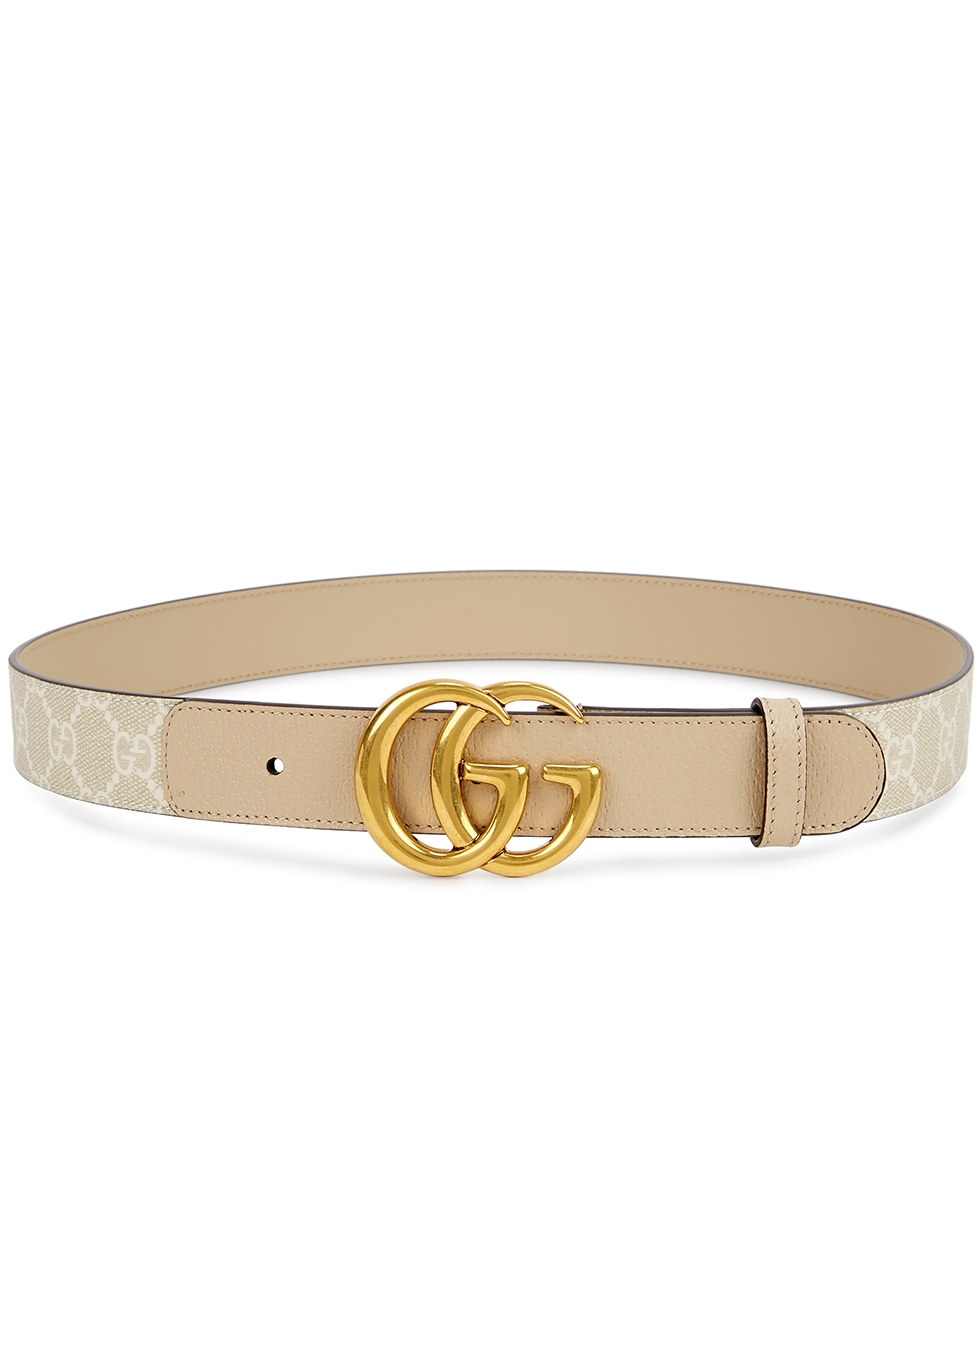 Gucci GG Supreme ivory monogrammed belt - Harvey Nichols